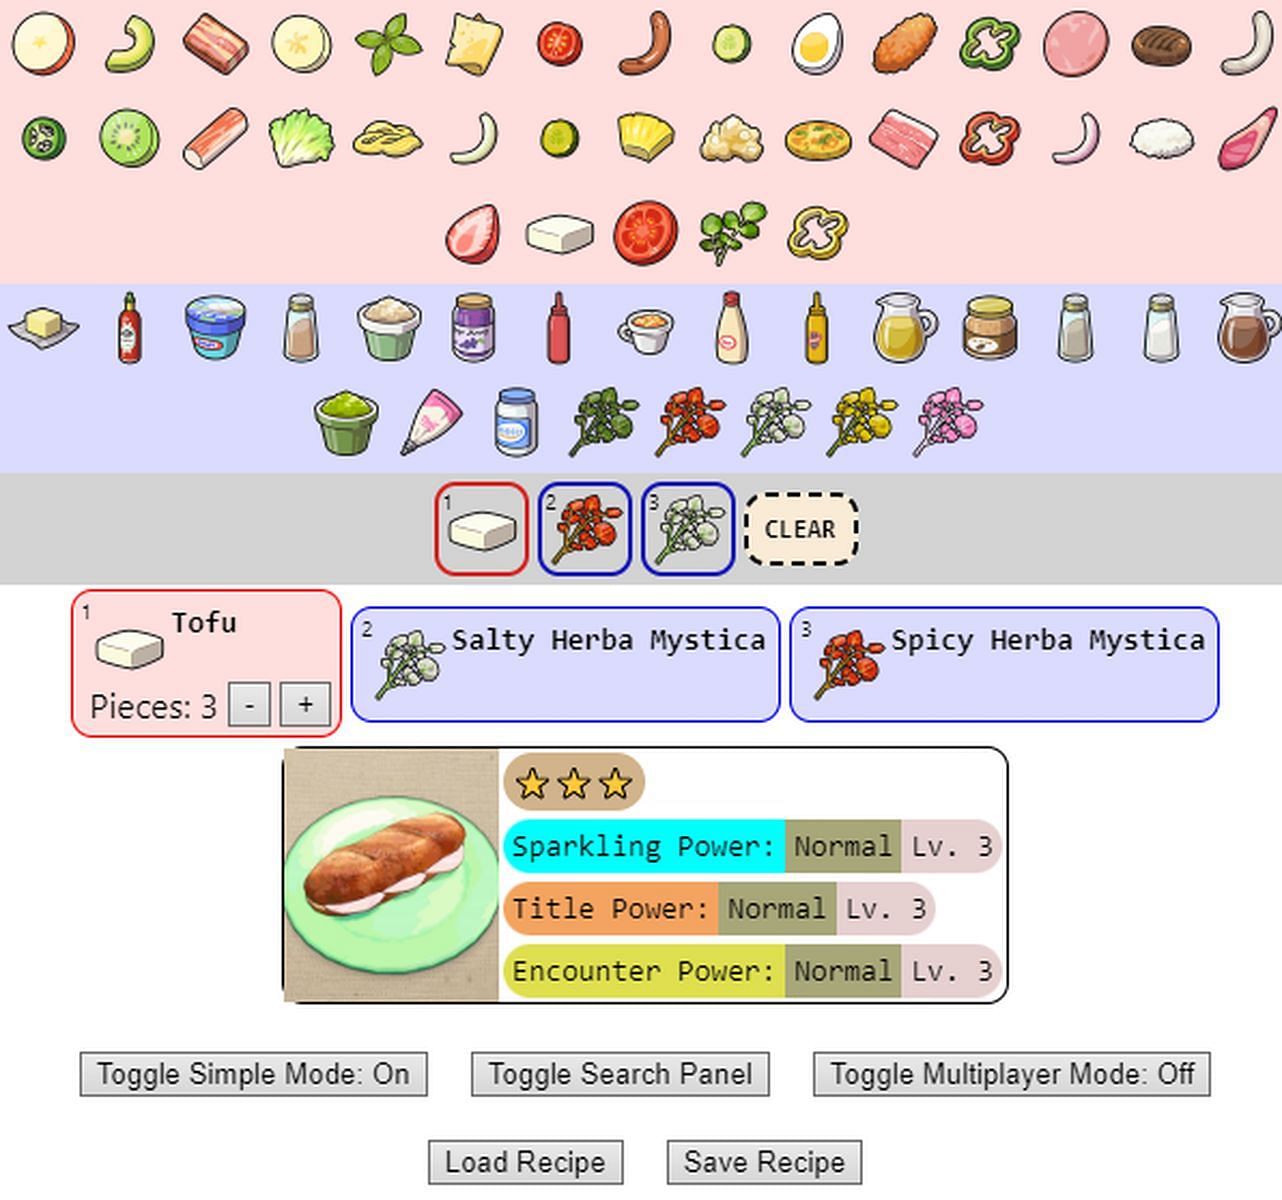 SV - Sandwich Recipes - Generation 9 - Project Pokemon Forums